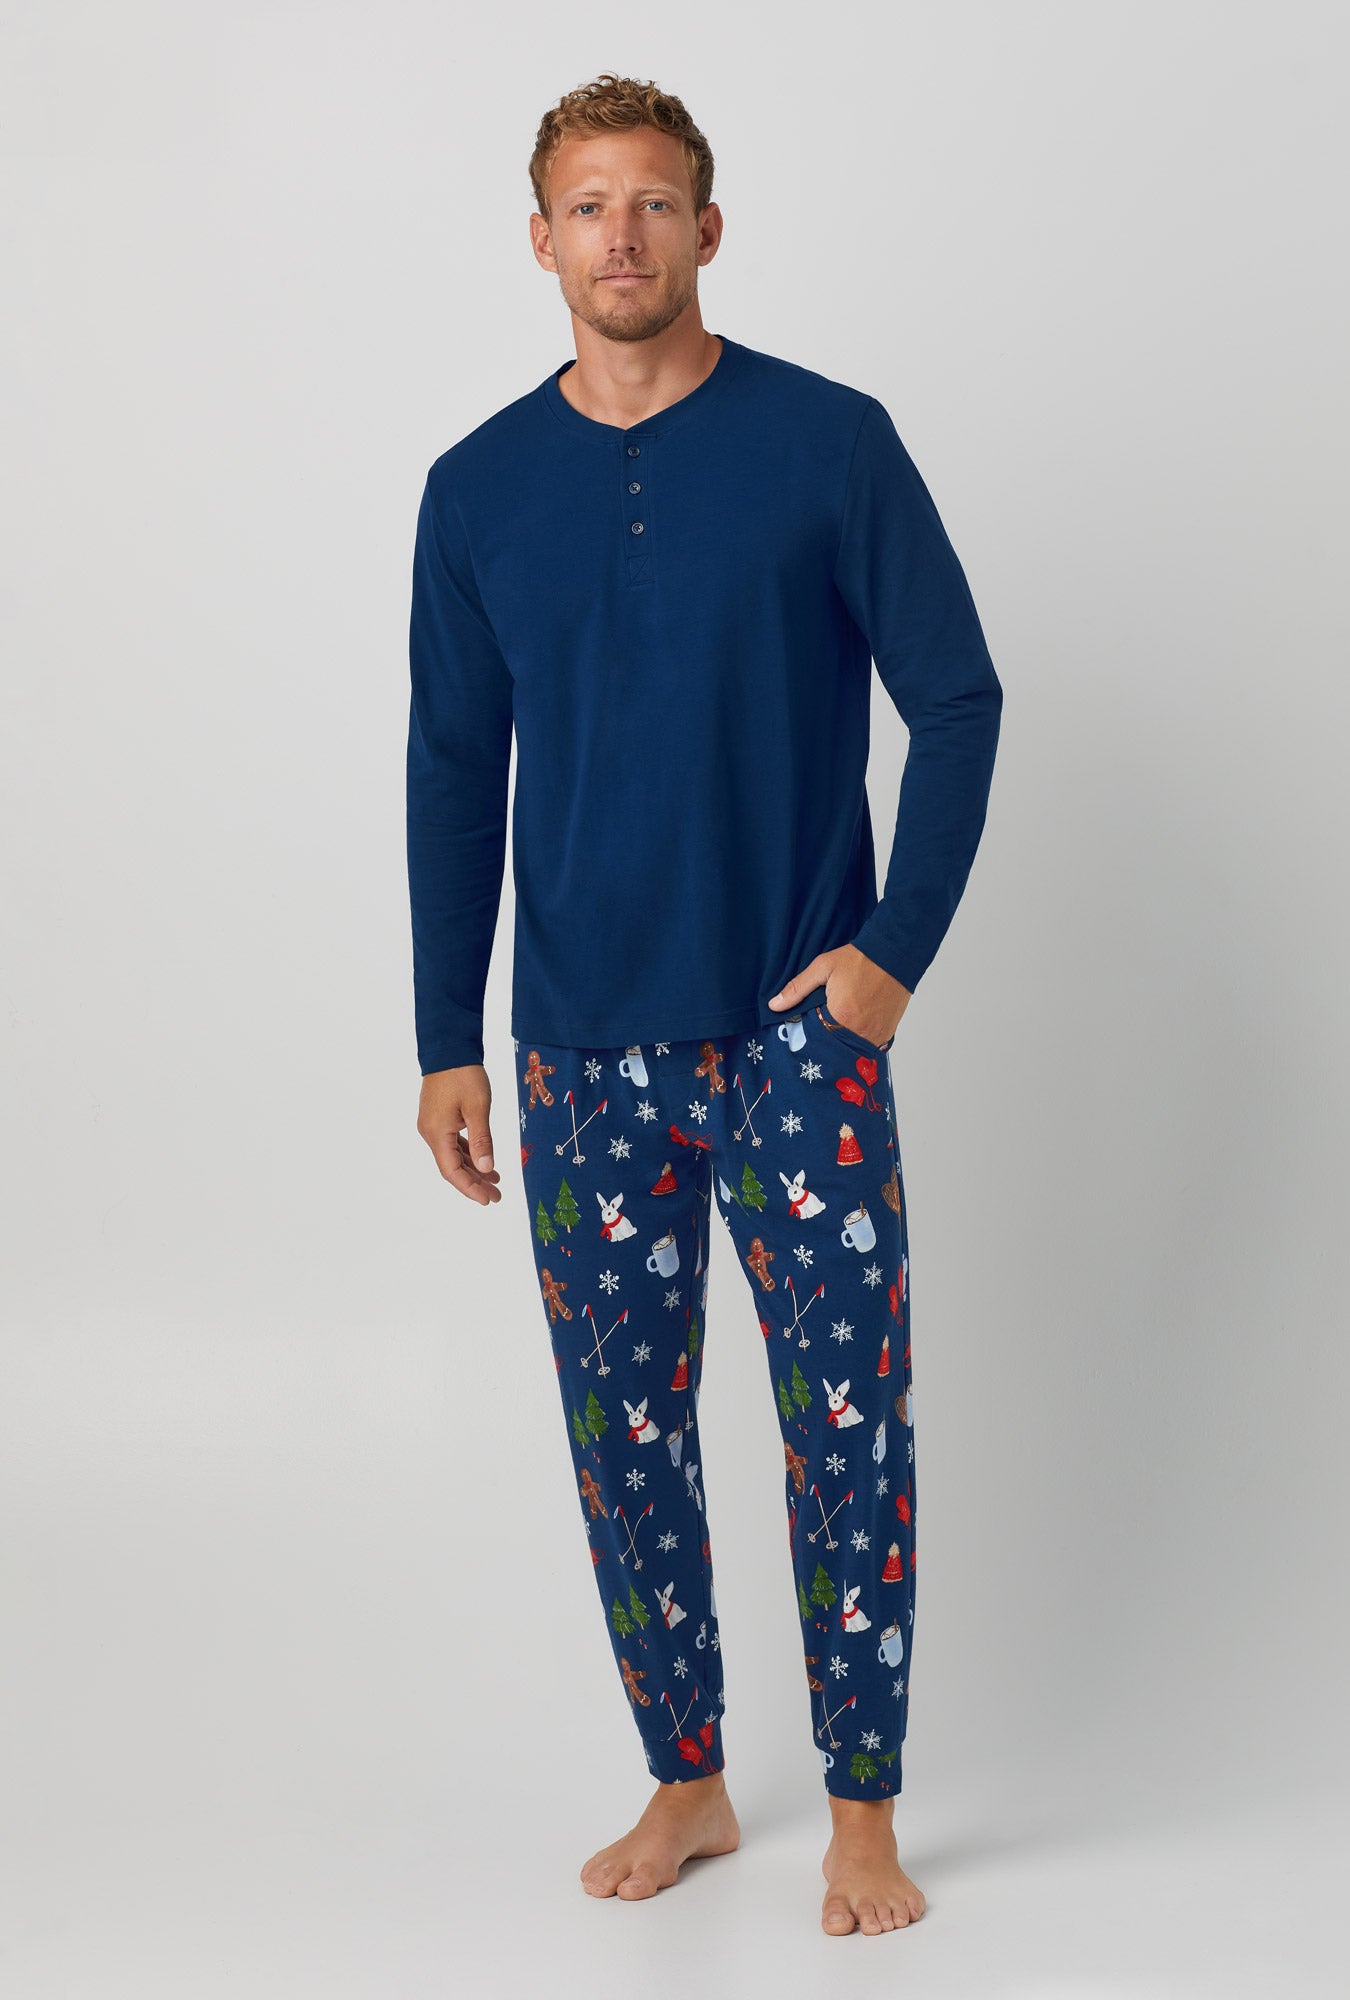 A man wearing blue Long Sleeve Jogger Stretch Jersey PJ Set with Seasonal Delights print